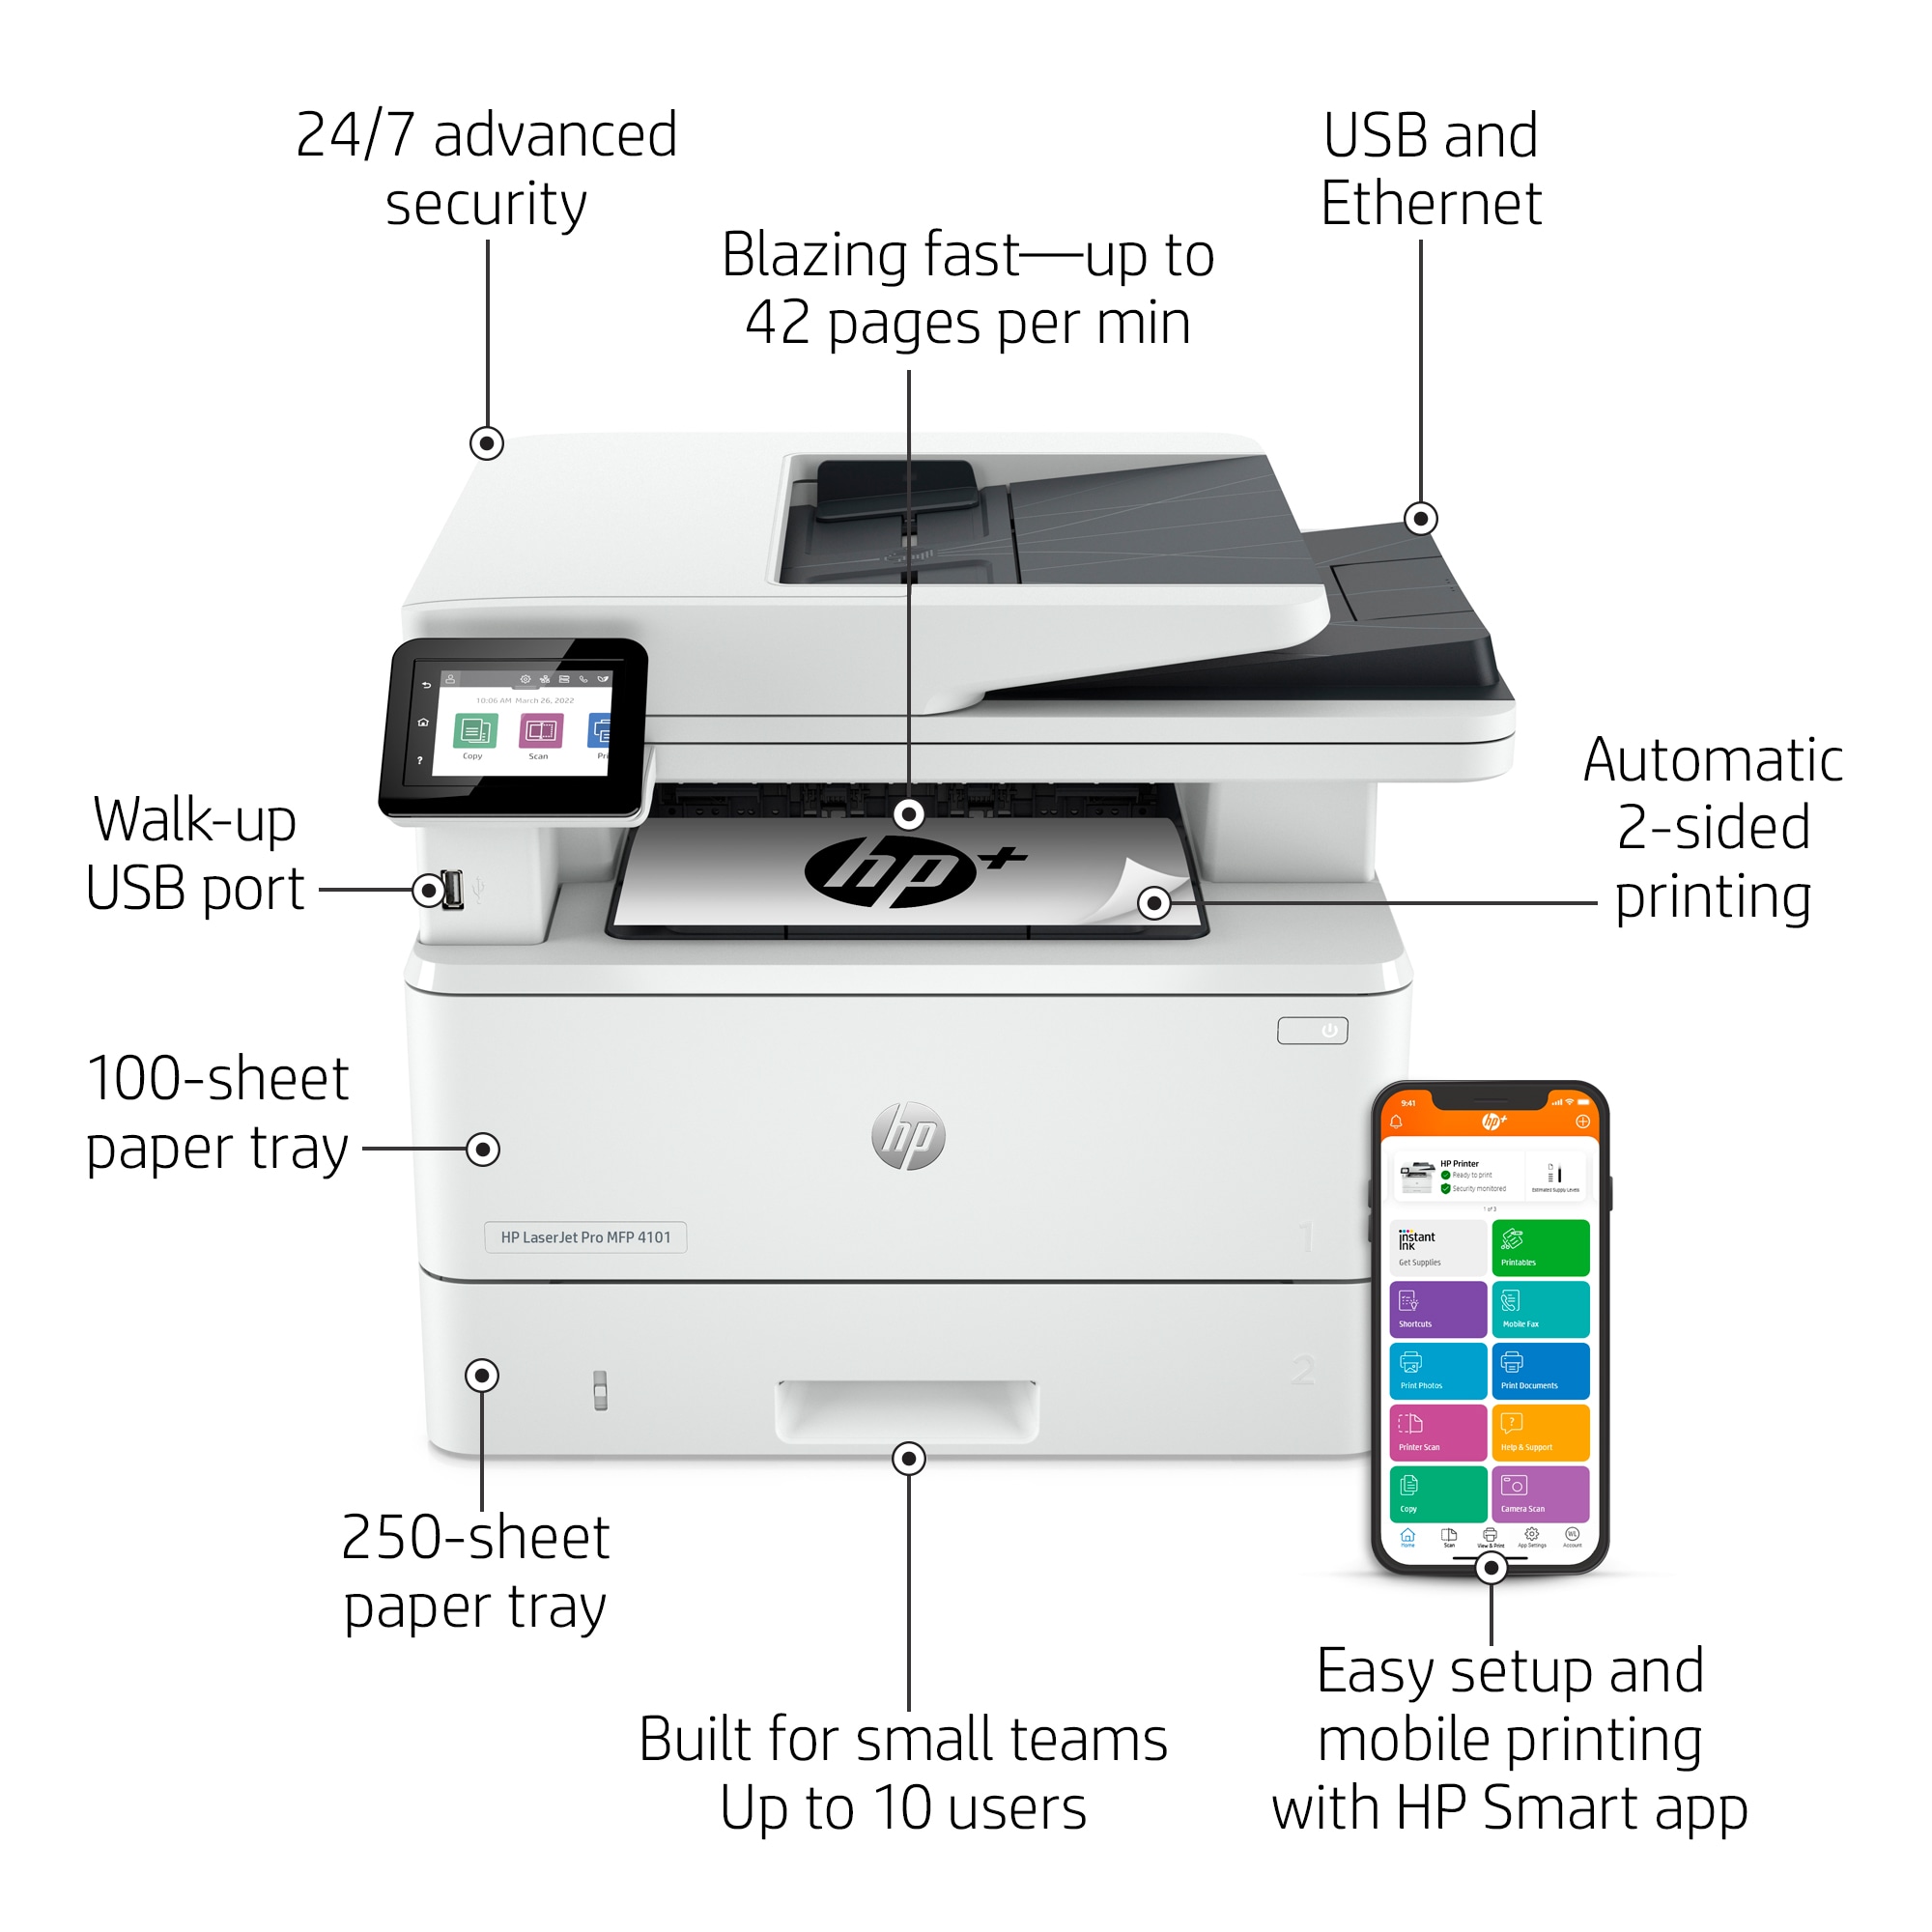 Imprimante multifonction HP LaserJet Pro 4101fdw - HP Store Canada